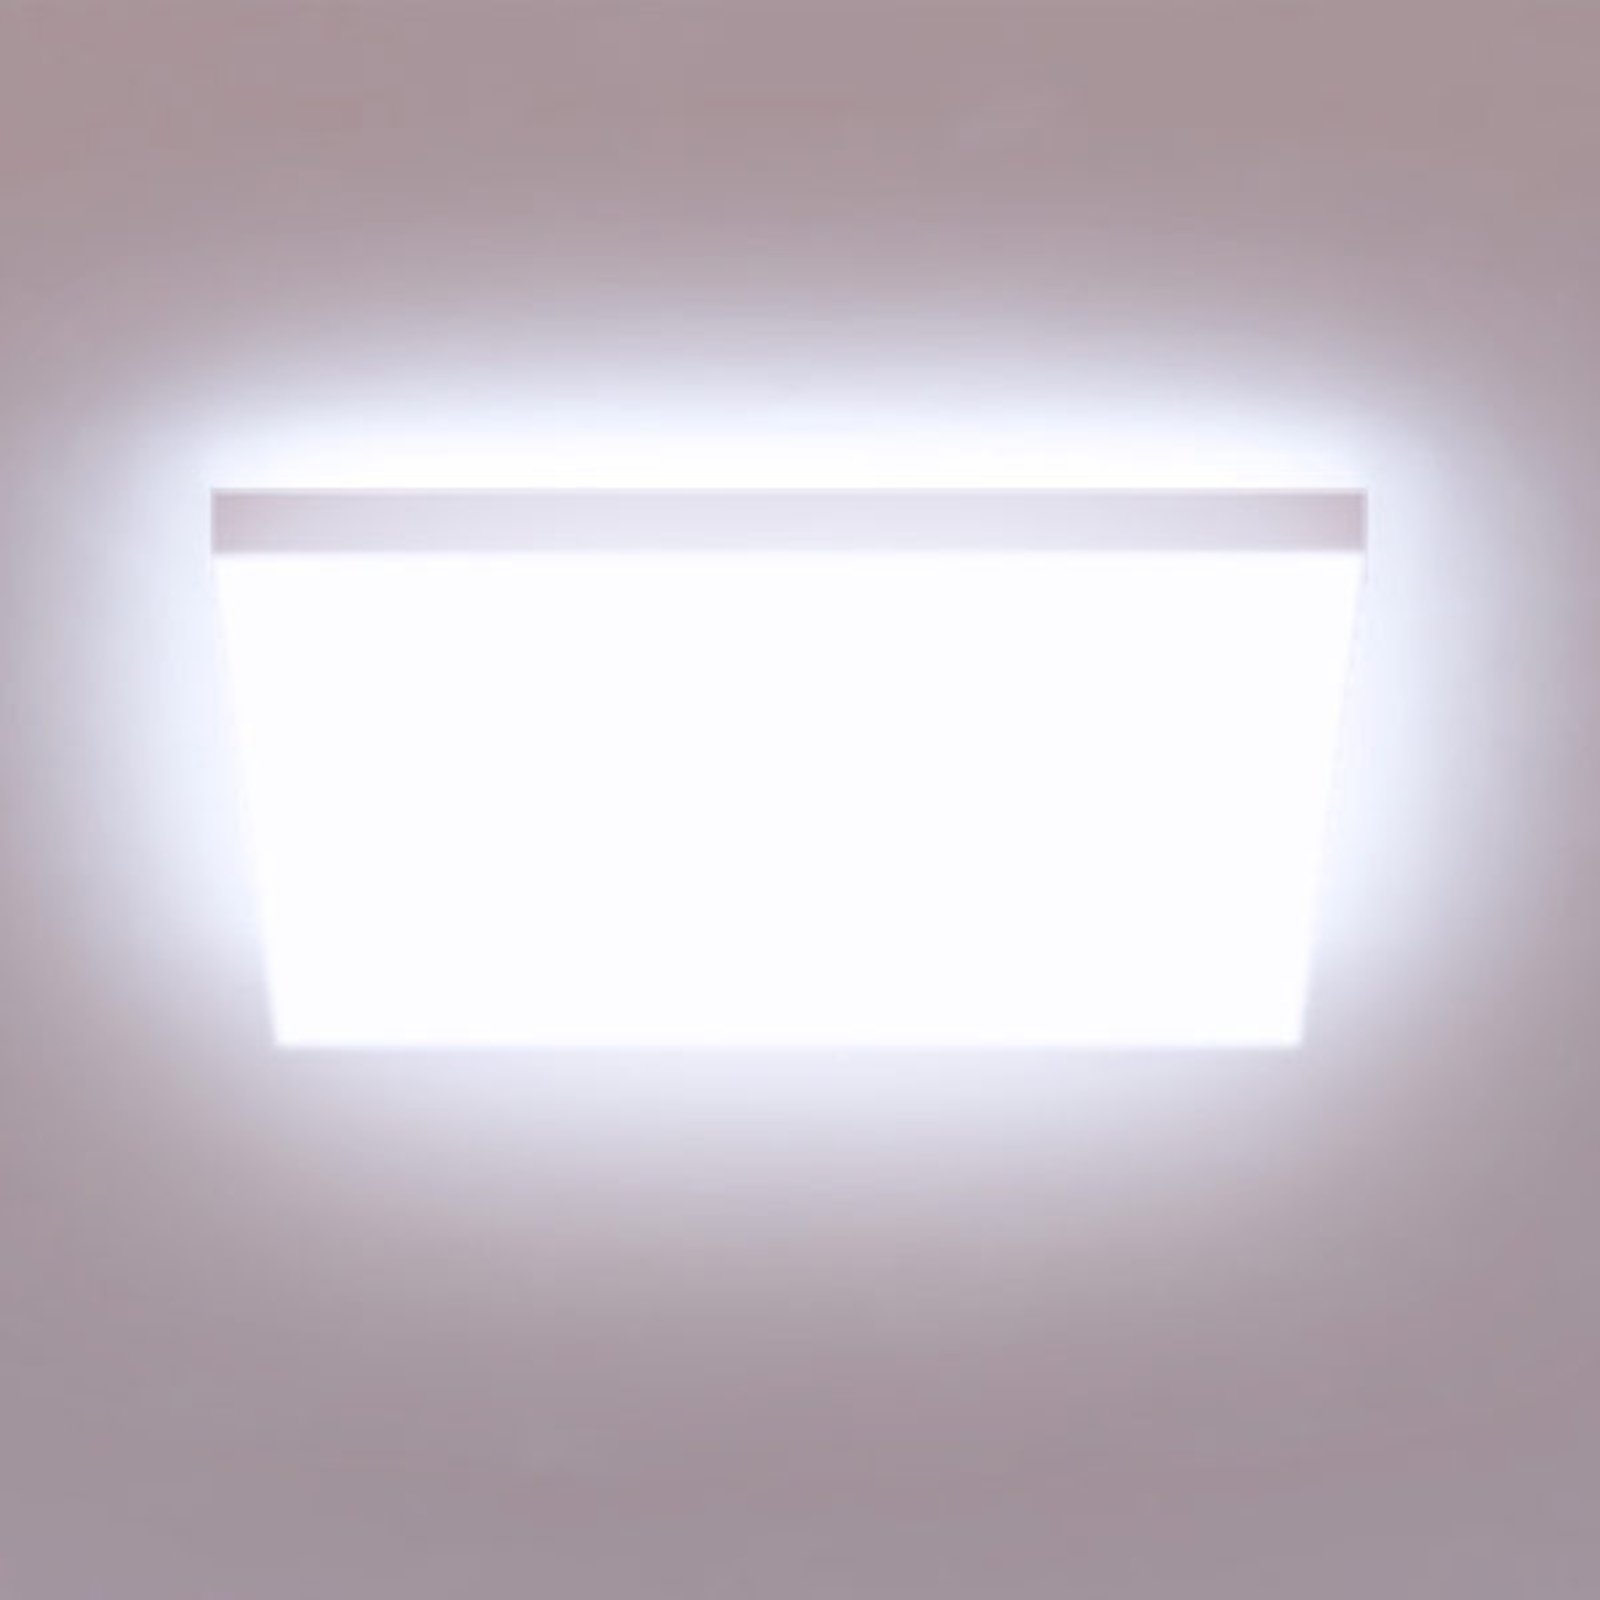 Müller Licht tint Loris LED panel, 45 x 45 cm